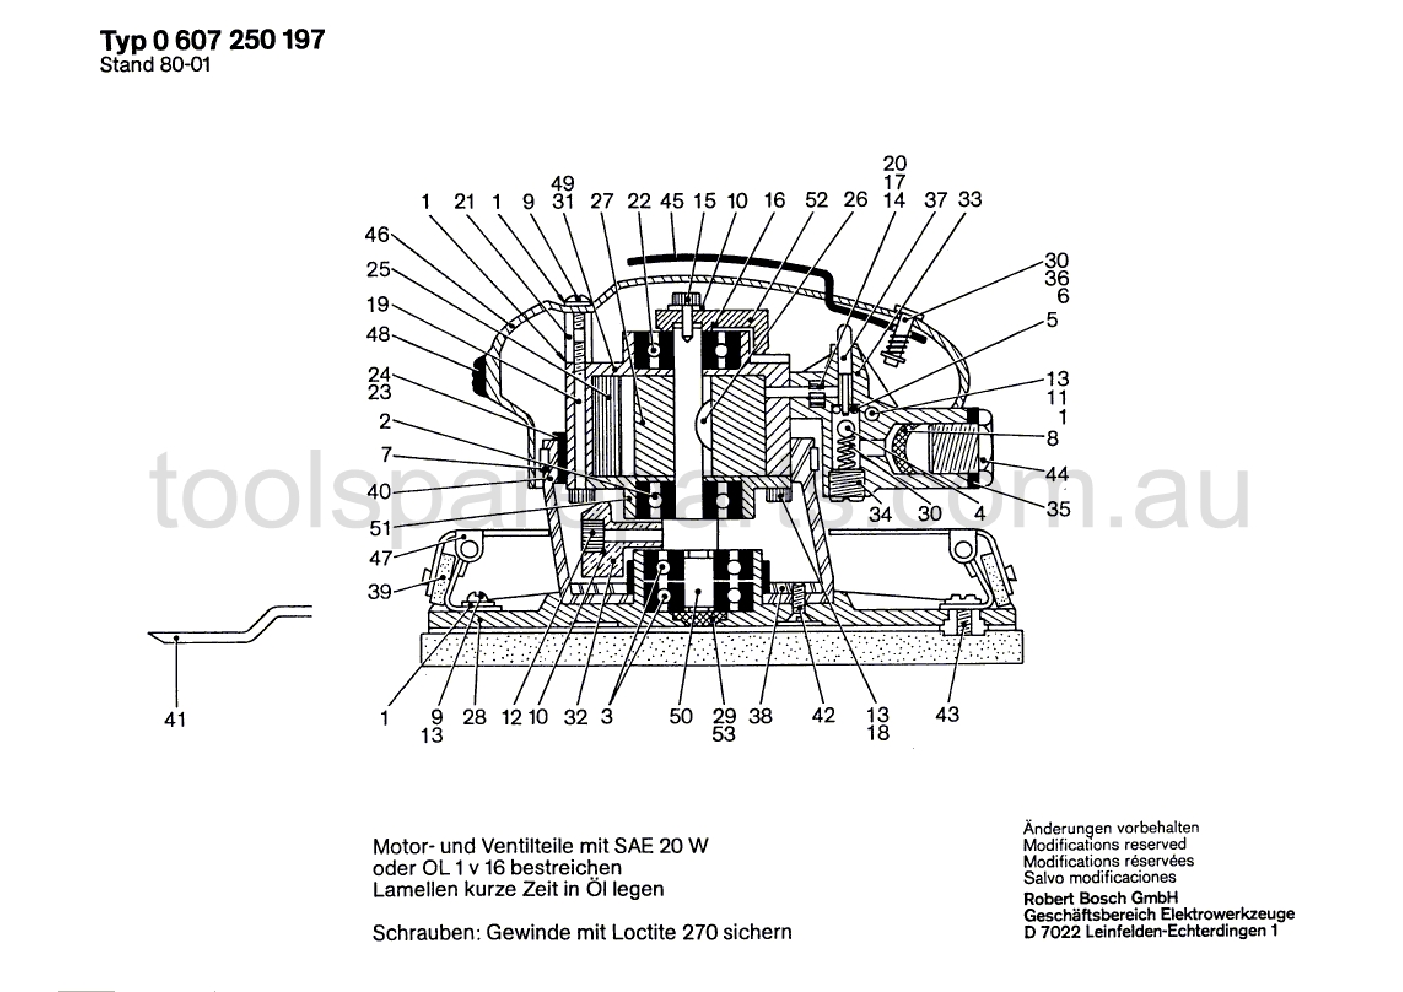 Bosch 50 WATT-SERIE 0607250197  Diagram 1